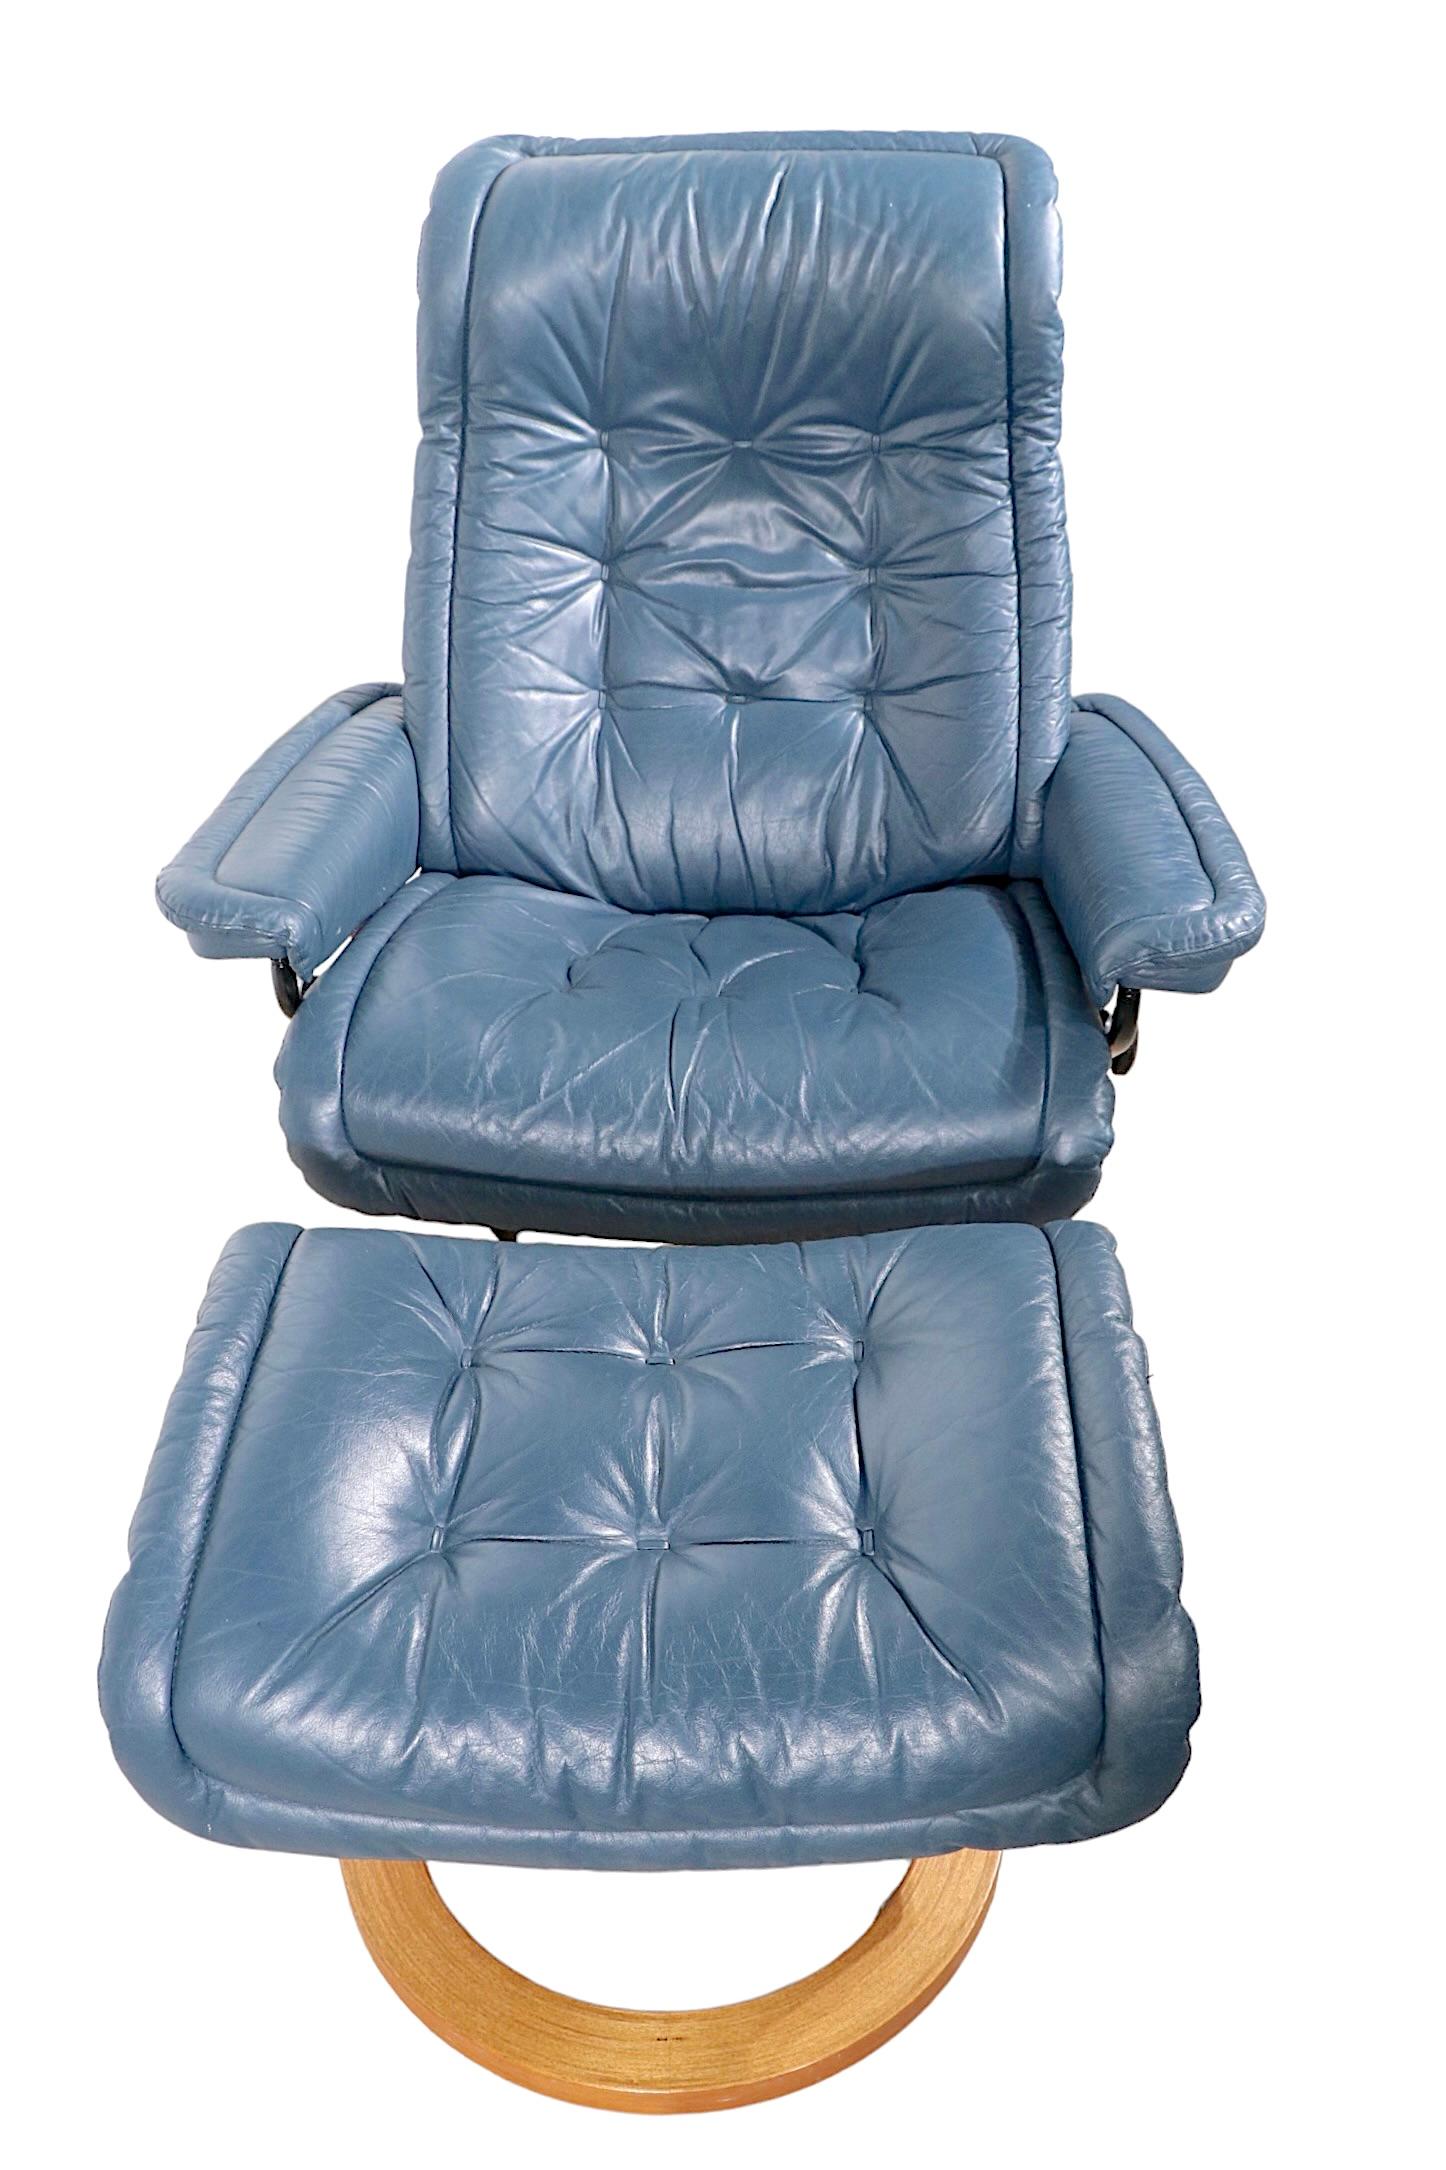 Scandinavian Modern Ekornes Stressless Reclining Lounge Chair with matching Ottoman Made in Norway 